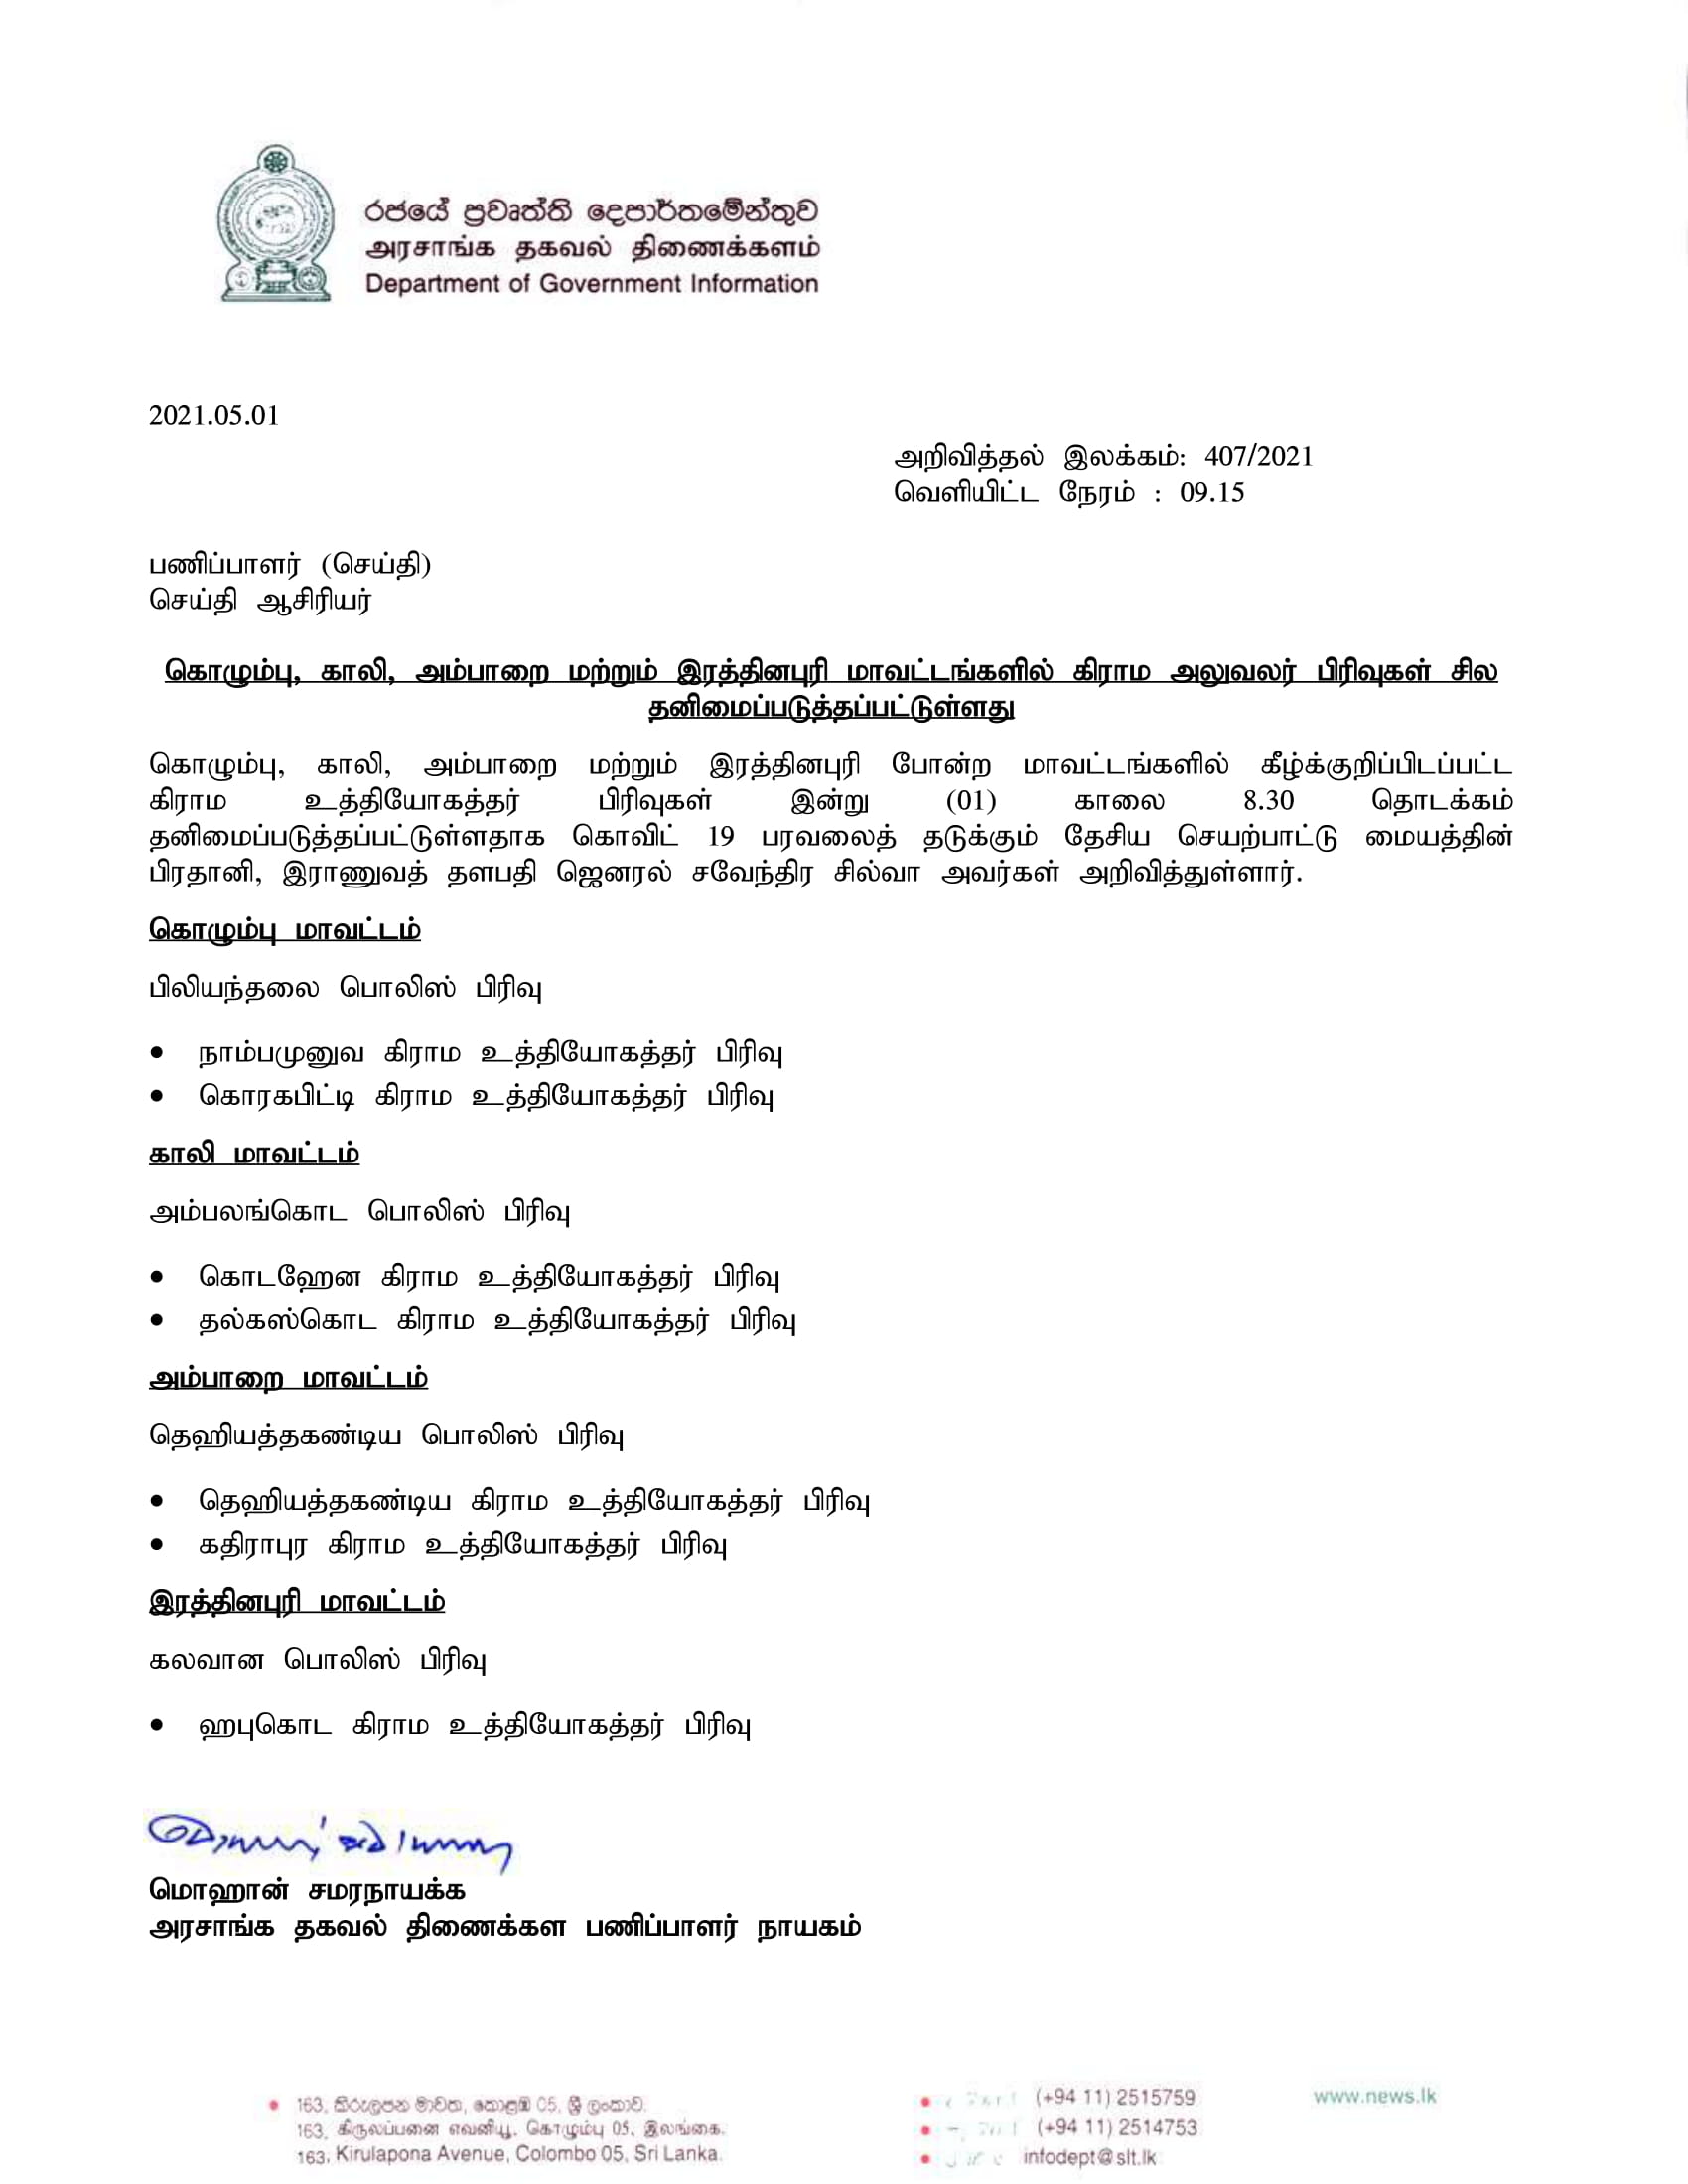 Release No 407 Tamil 1